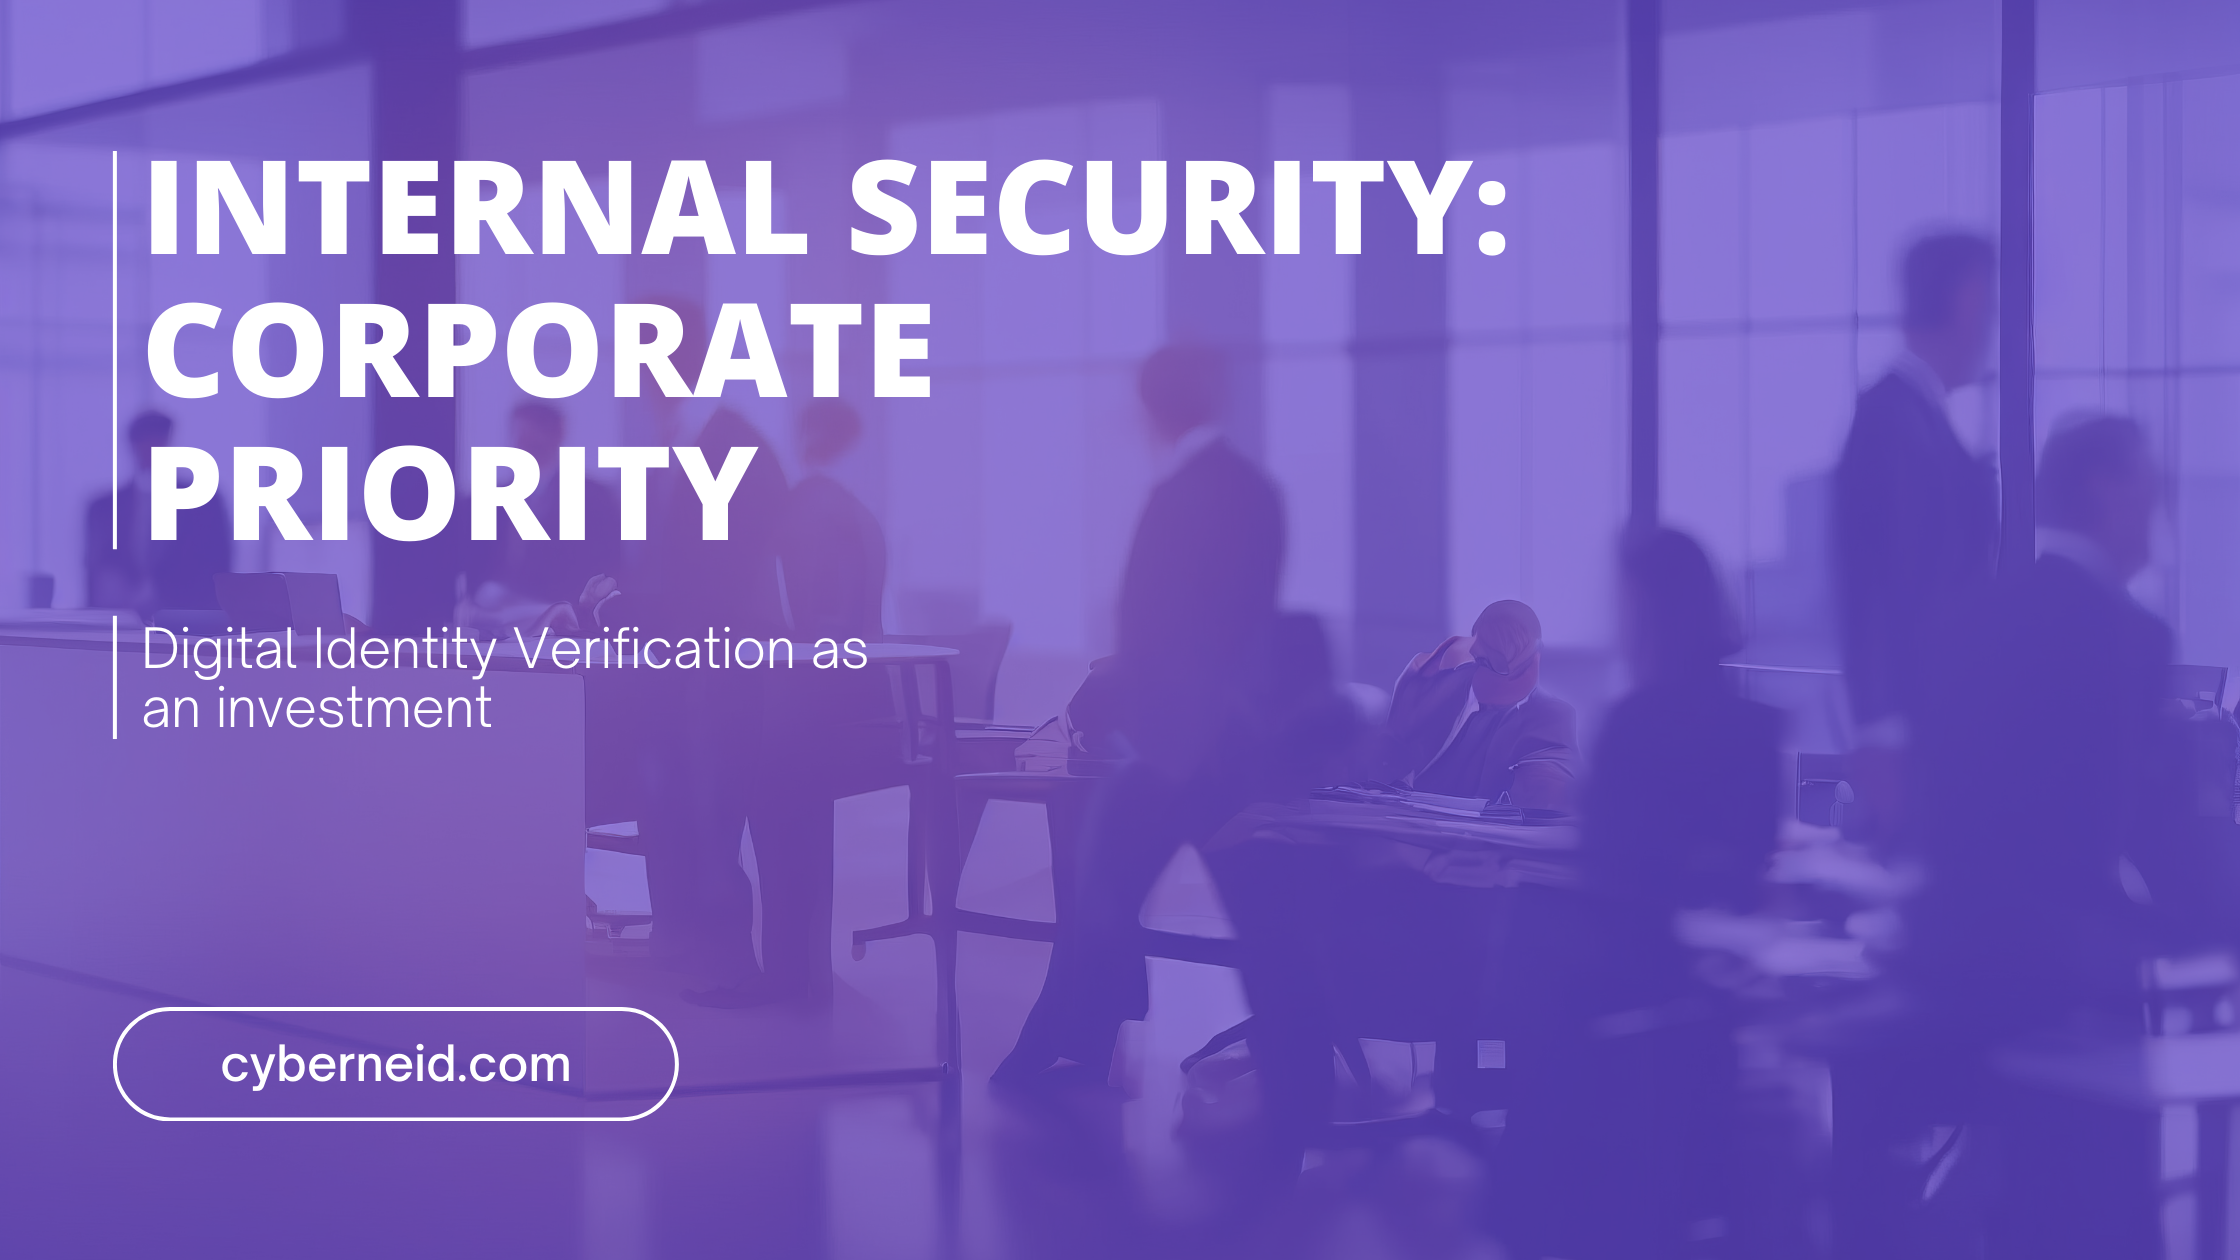 Internal Security for Corporates: Digital Identity Verification